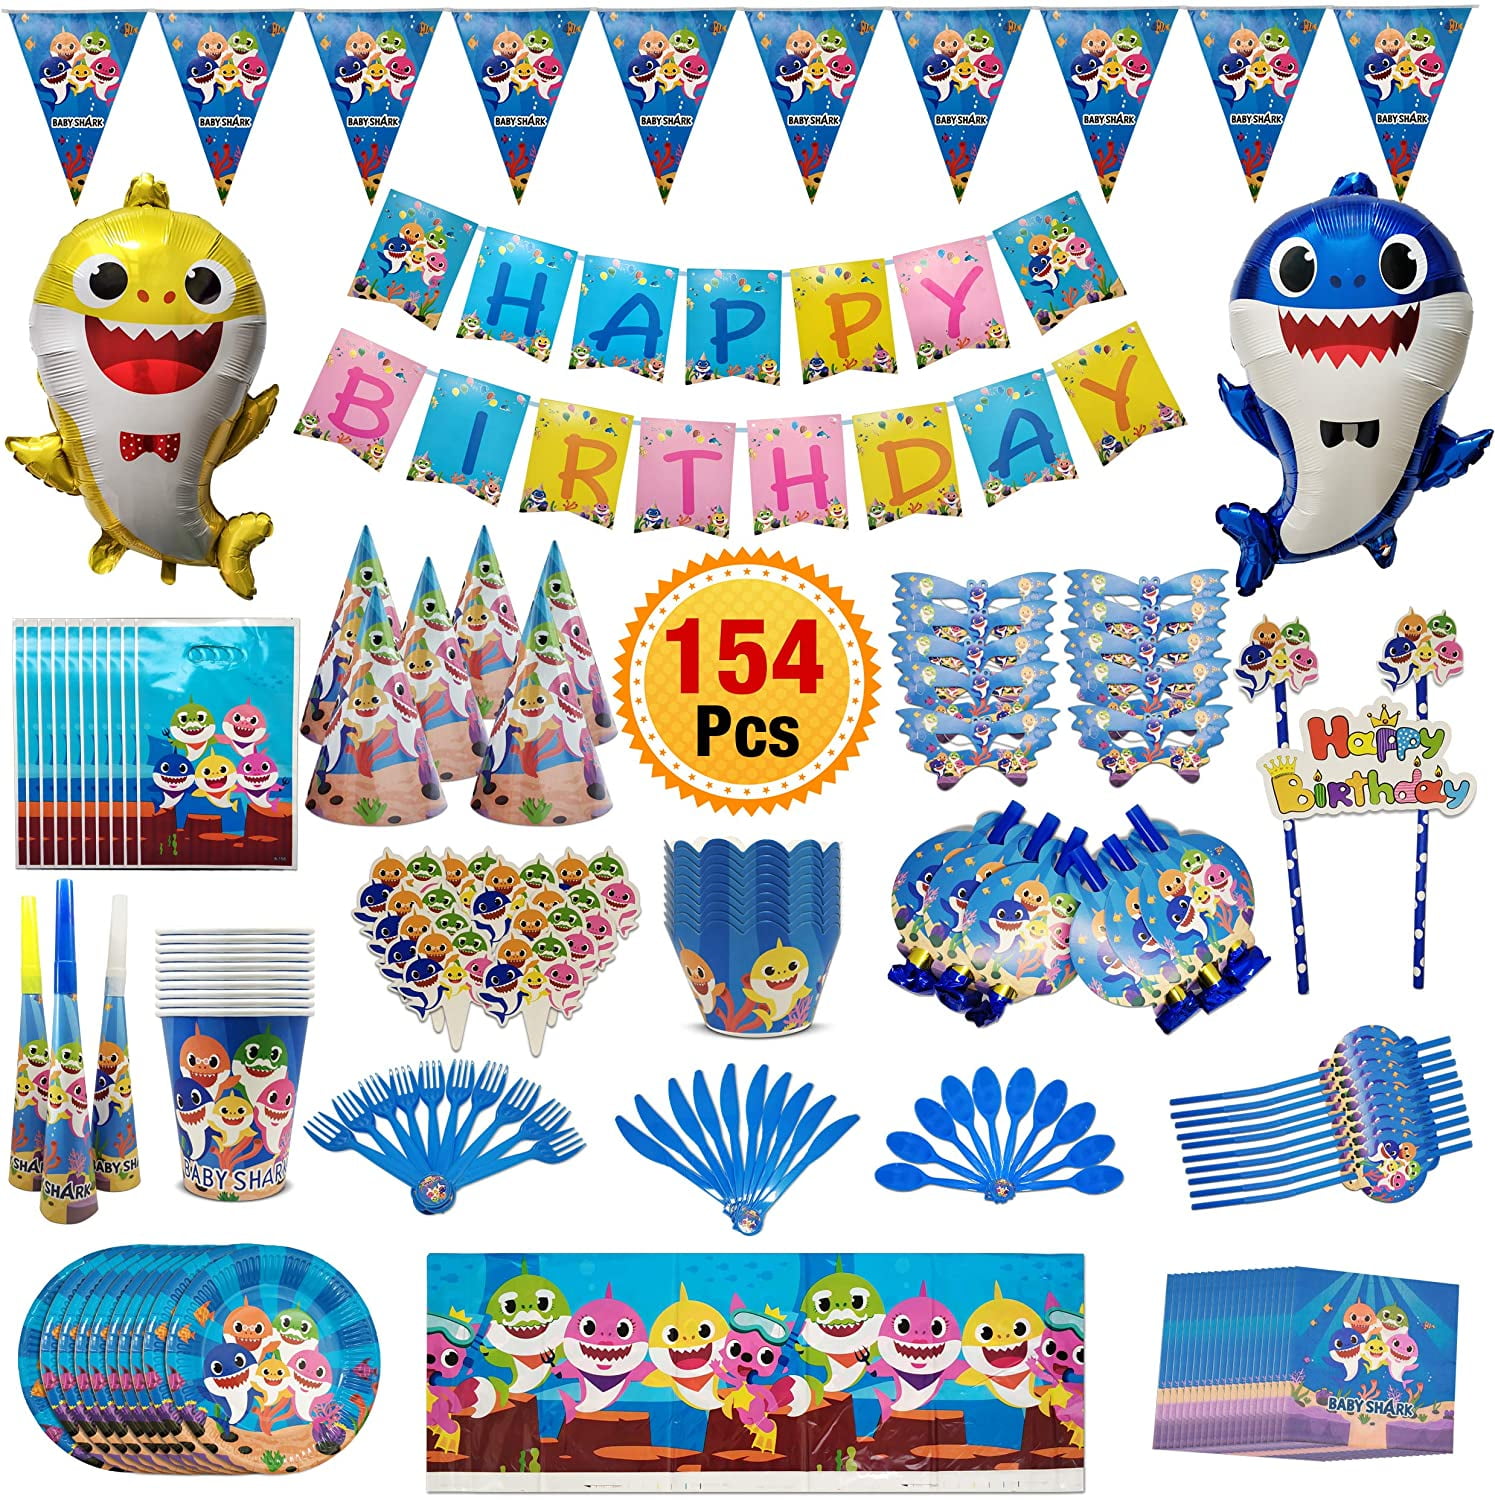 27 Pcs Shark Balloons Set Mylar Happy Birthday Party Supply Kids Favor Decor 